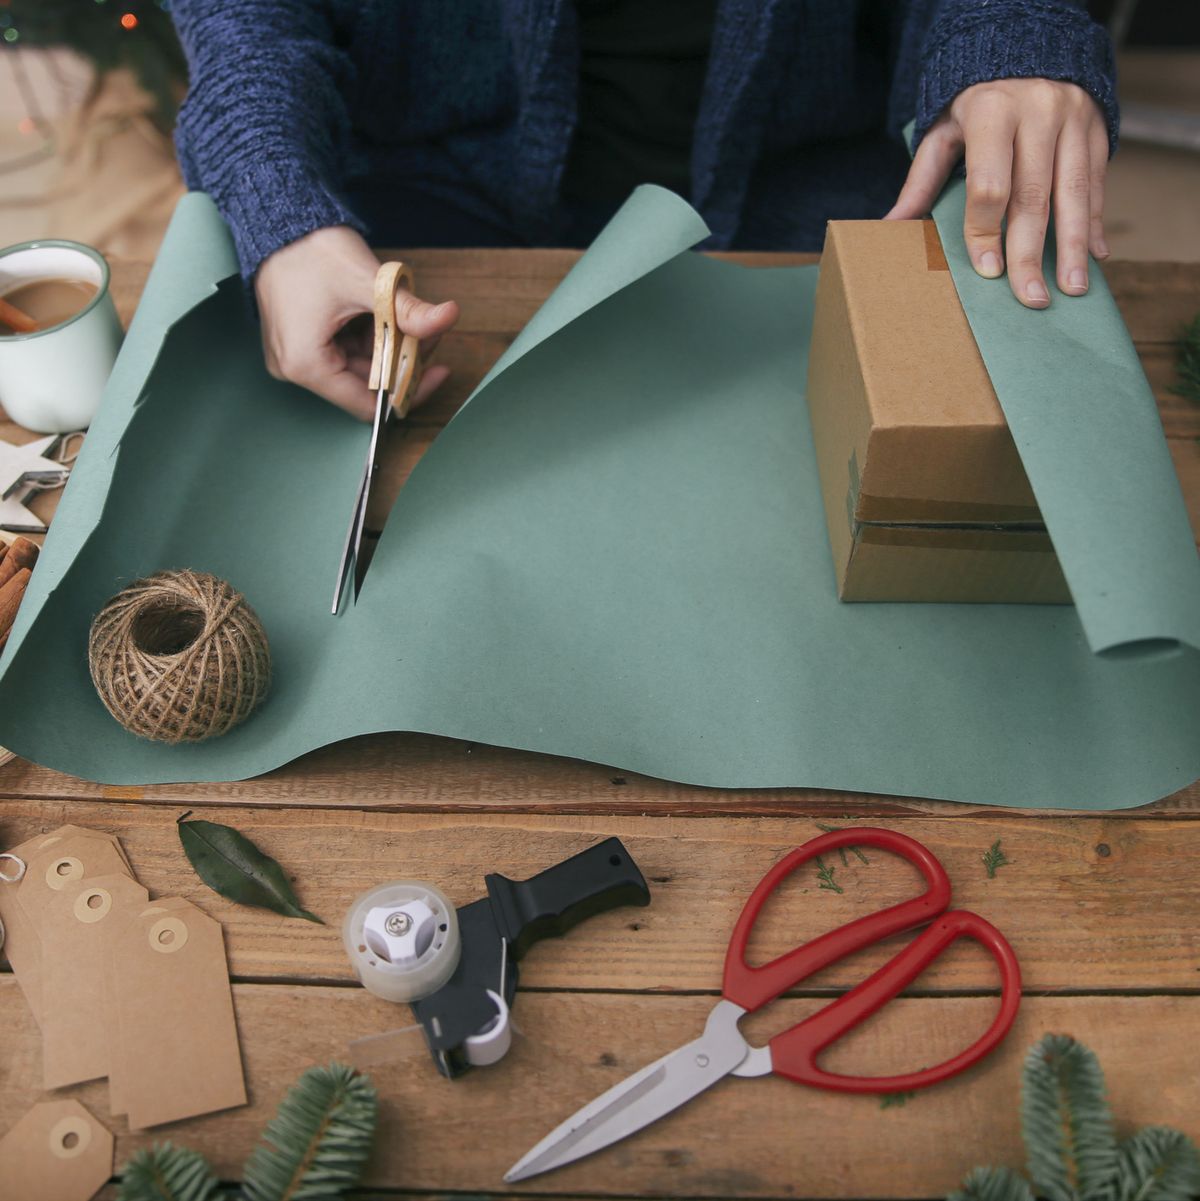 Wrapping Paper Cutter vs Scissors